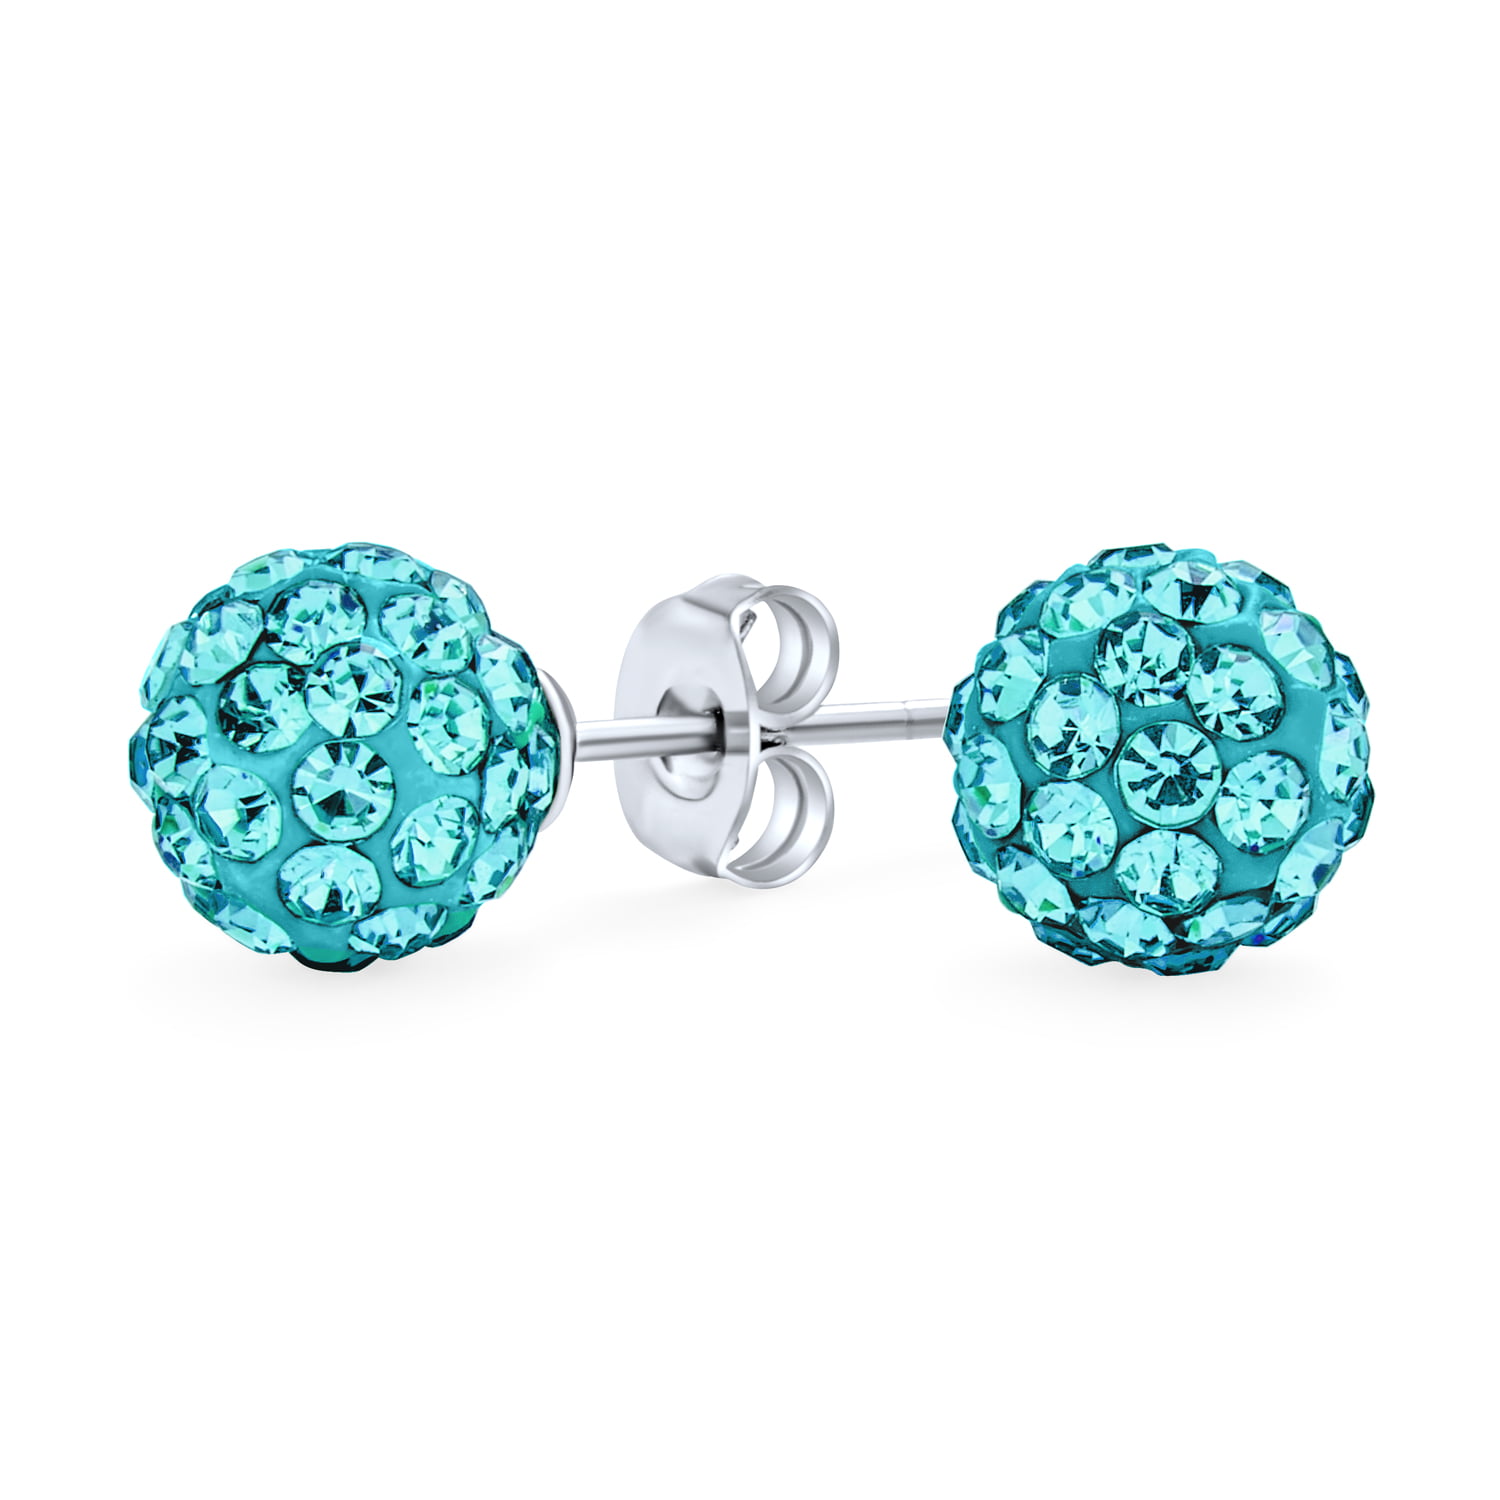 Teal green fused glass stud earrings on sterling silver for pierced ears.